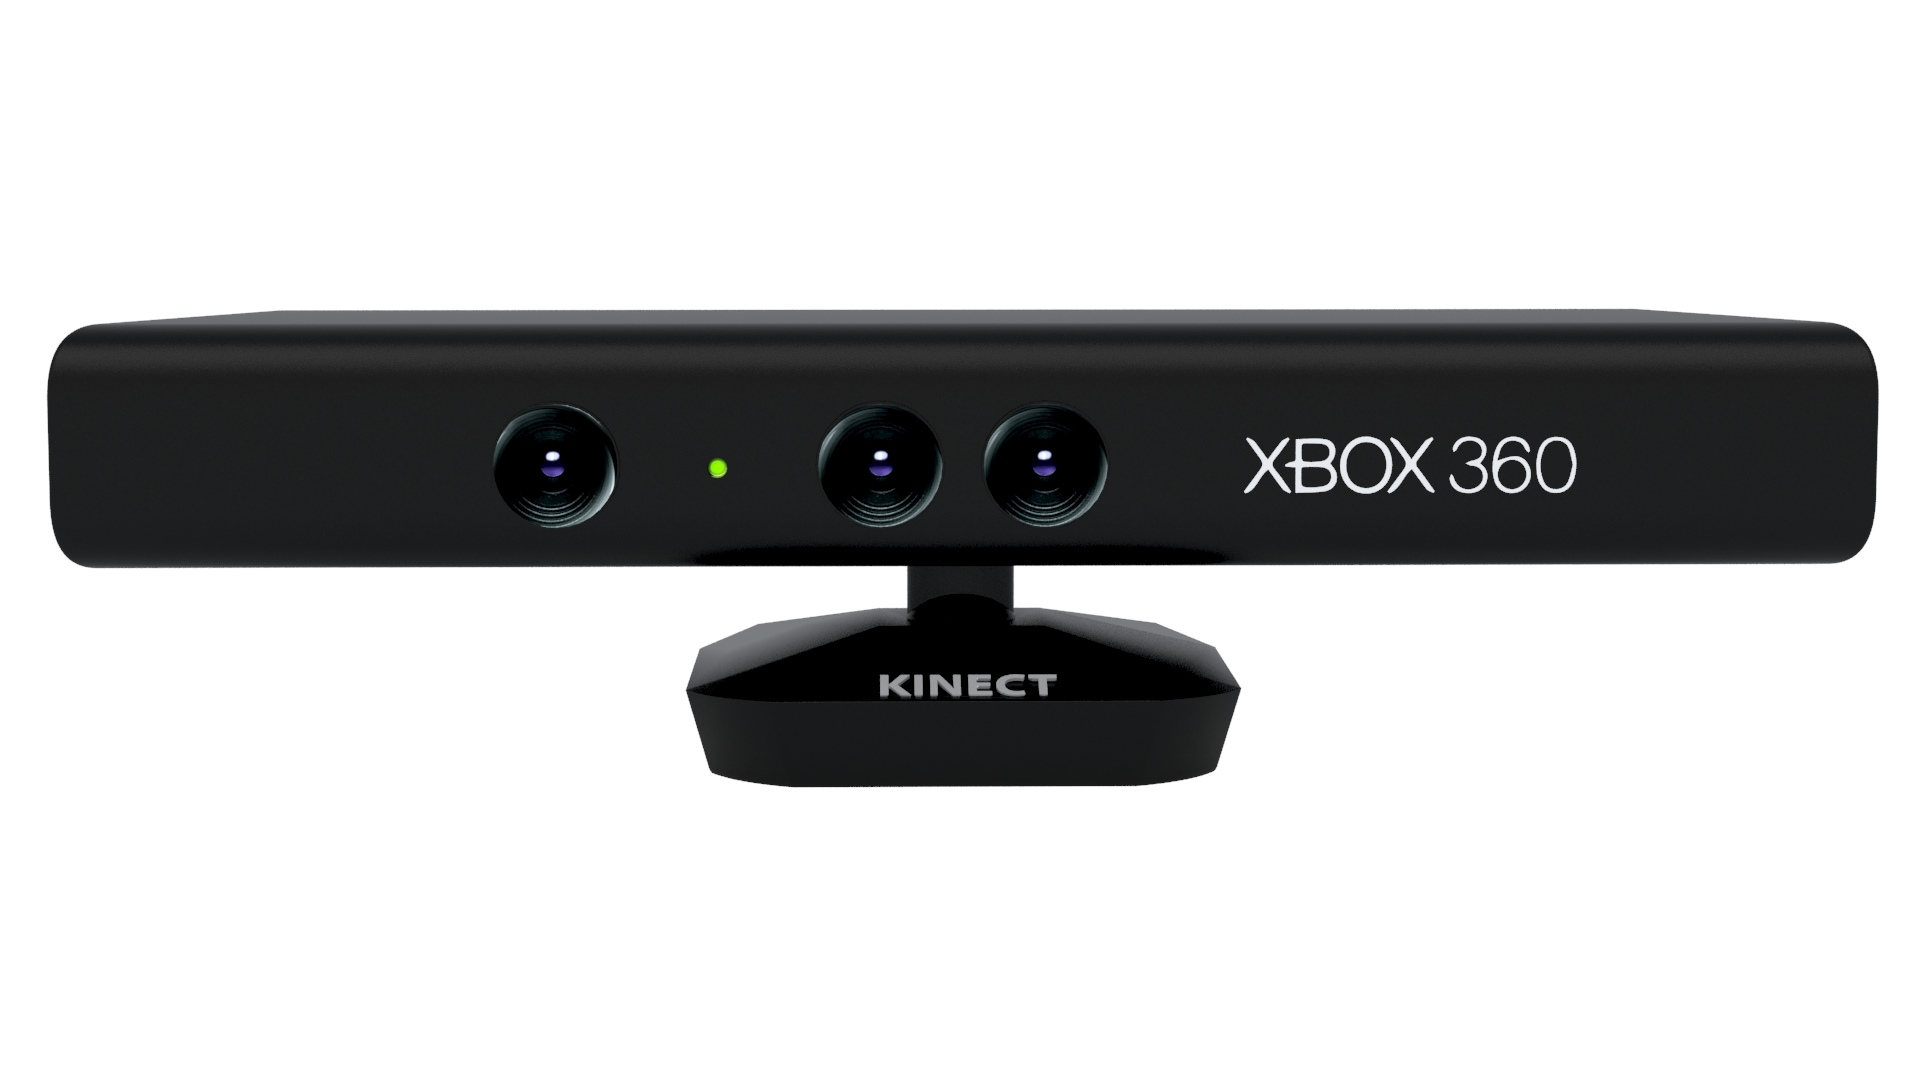 Pare de xingar o Kinect, ele foi importante para os videogames sim! -  Arkade